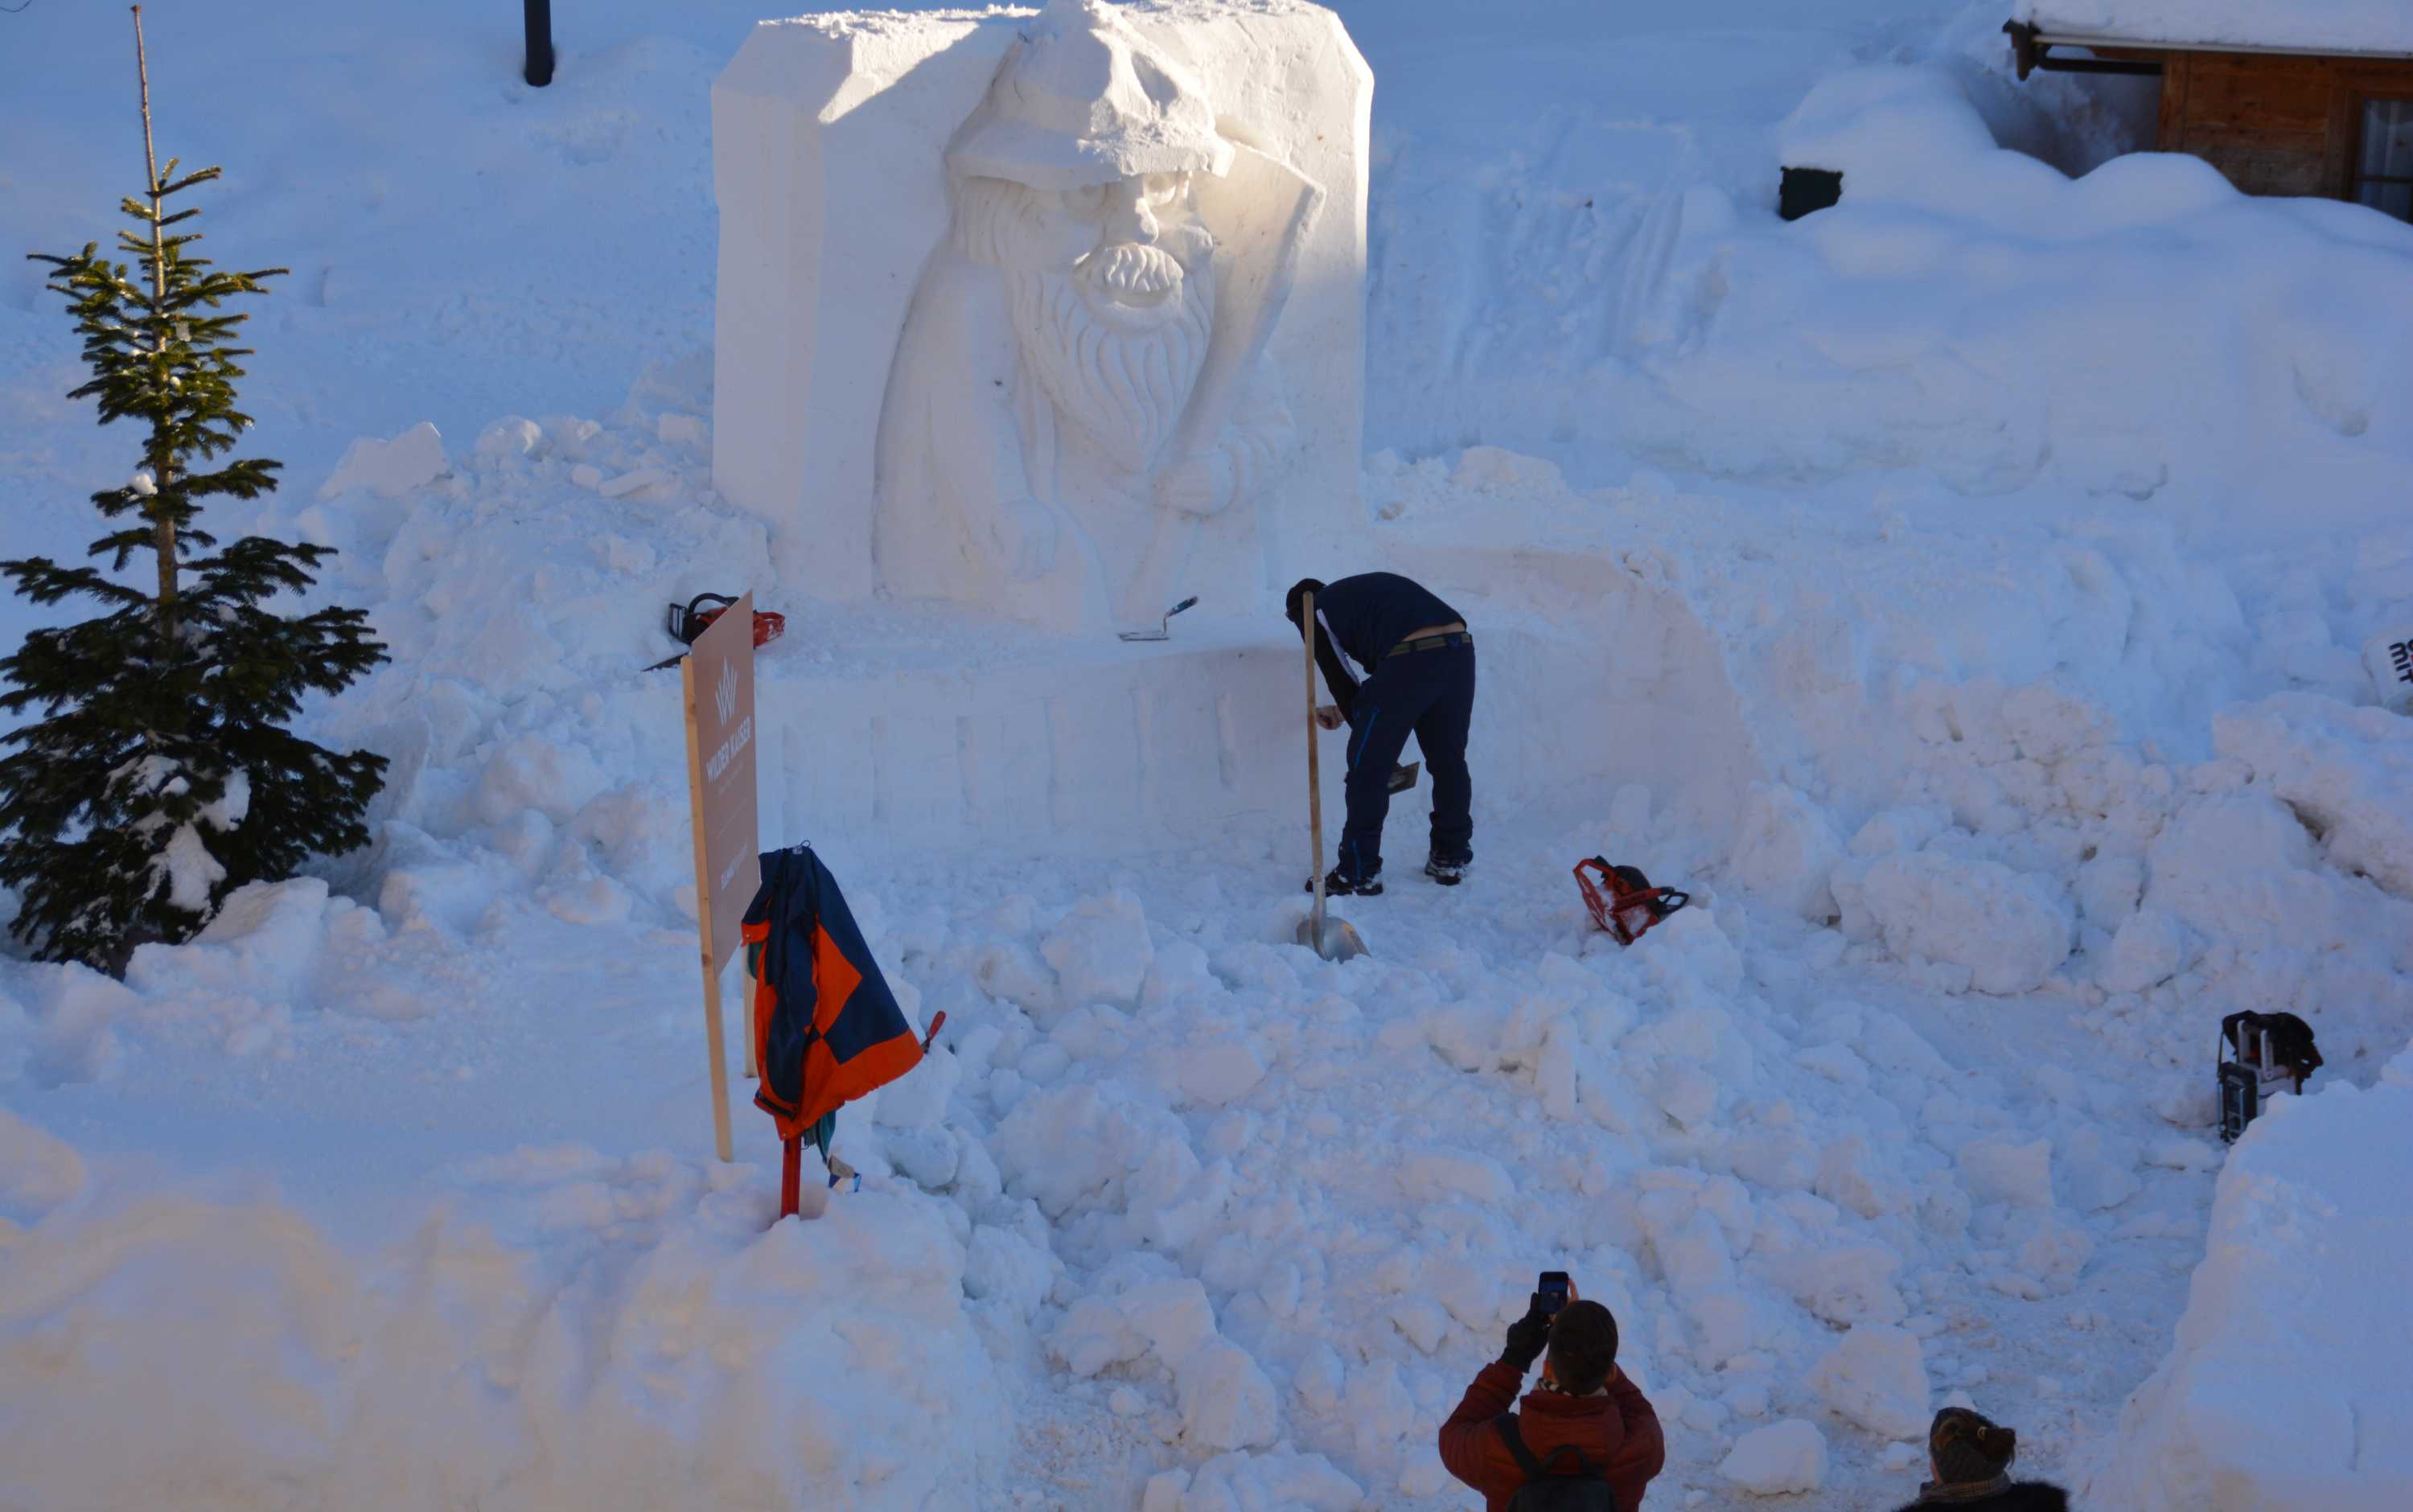 Schneeskulptur Publikum_2019-01-31_web